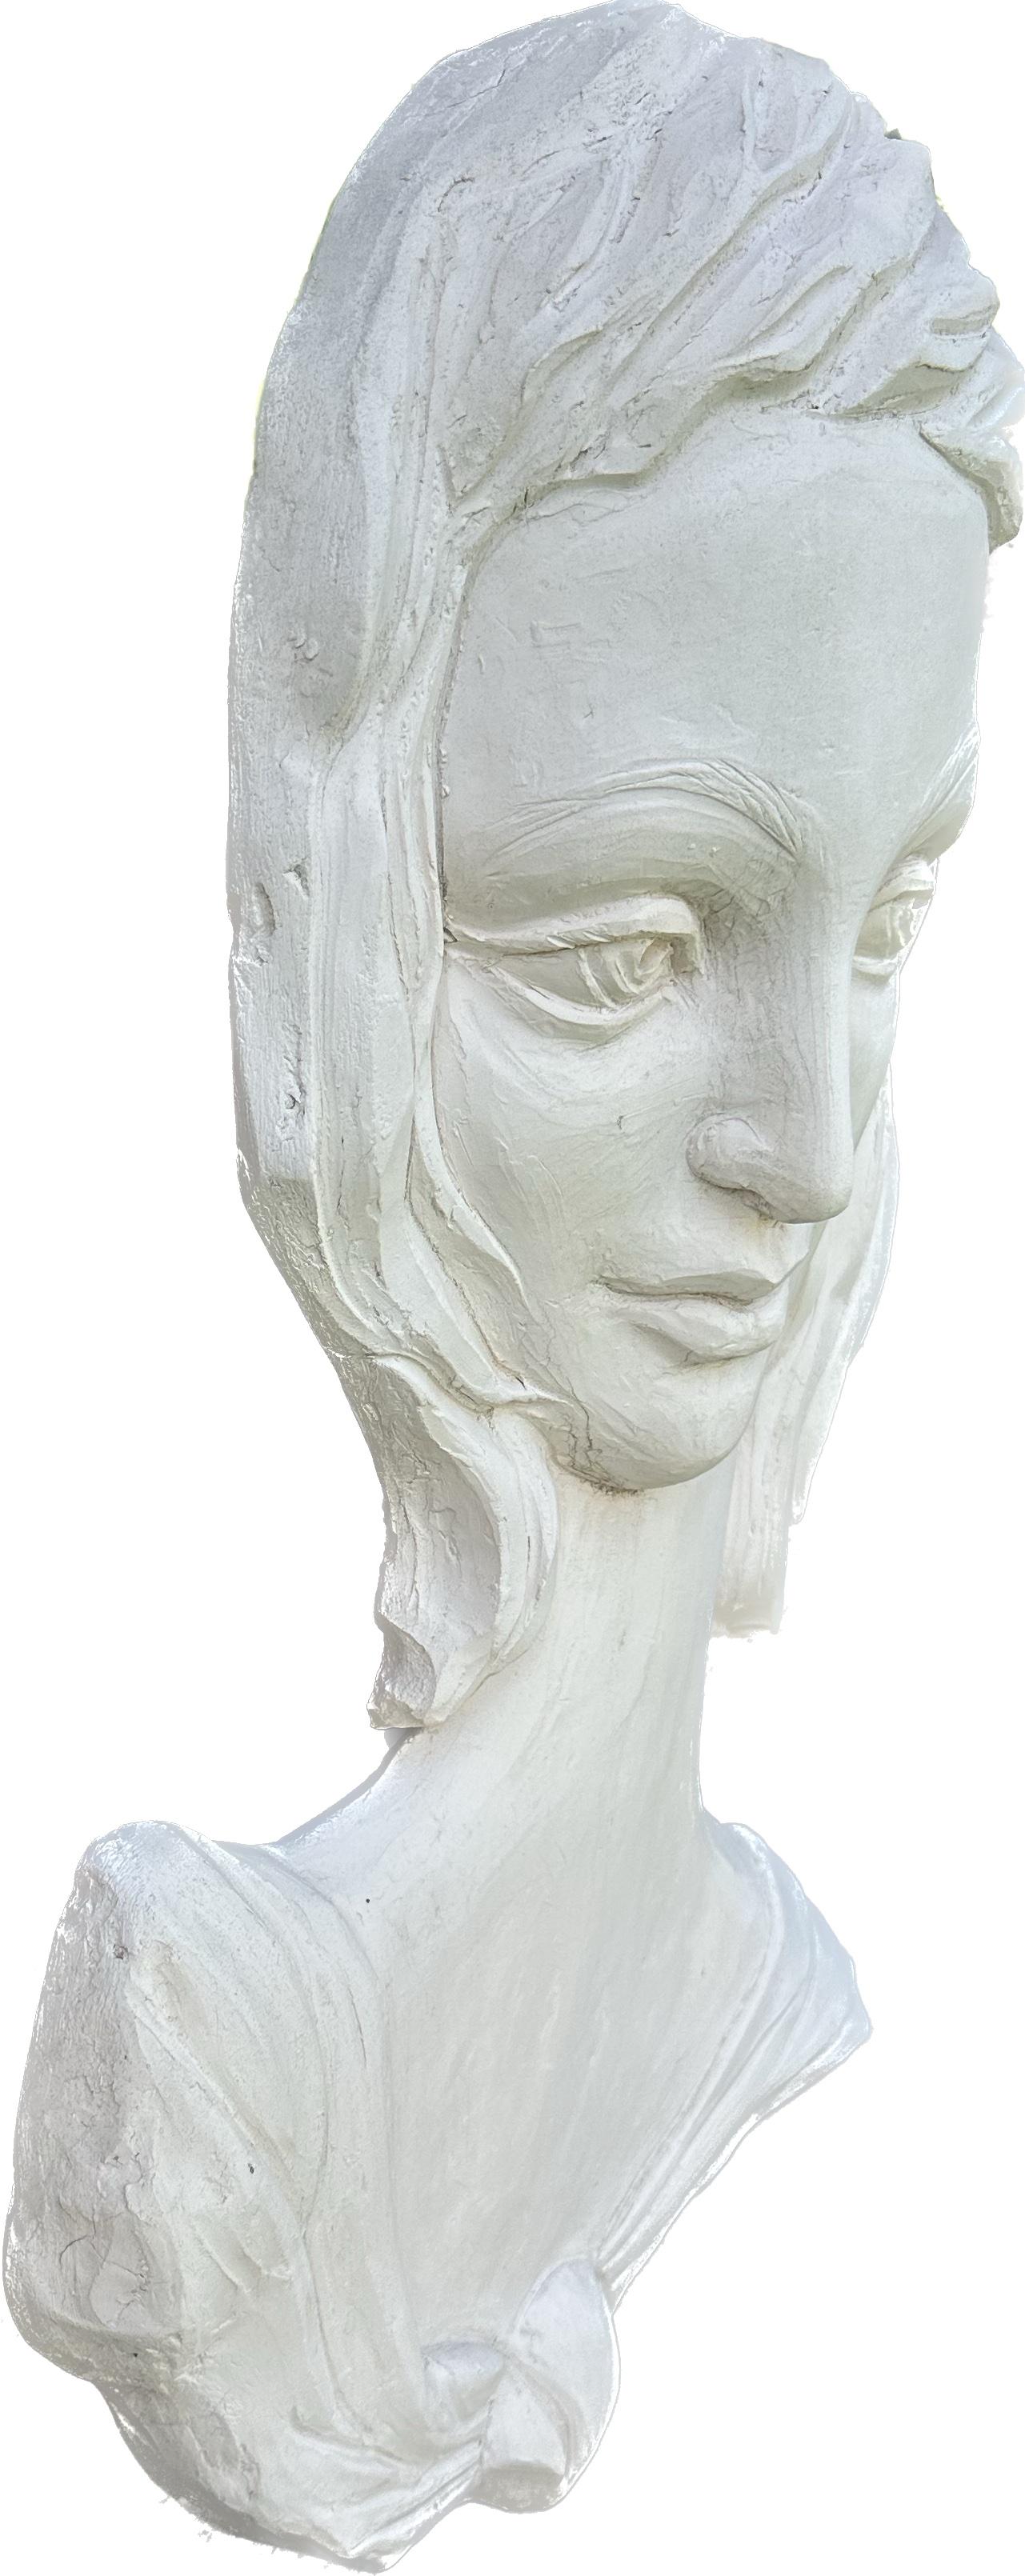 Portrait of Woman, Sculpture, Ceramic Handmade by Garo, One of a Kind - Gray Figurative Sculpture by Karapet Balakeseryan  (Garo)